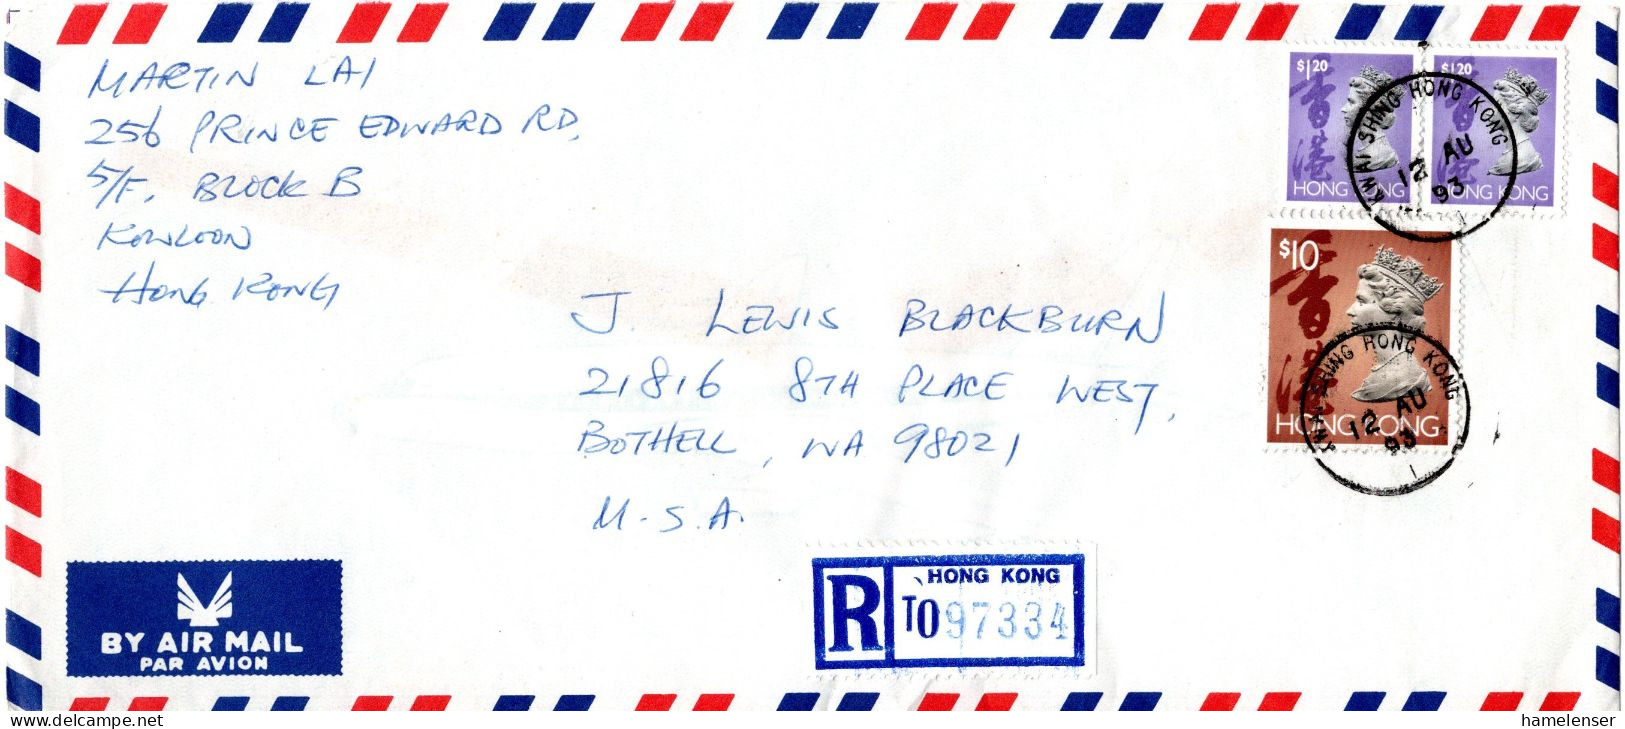 L76707 - Hong Kong - 1993 - $10 QEII MiF A R-LpBf KWAI SHING -> Bothell, WA (USA) - Lettres & Documents